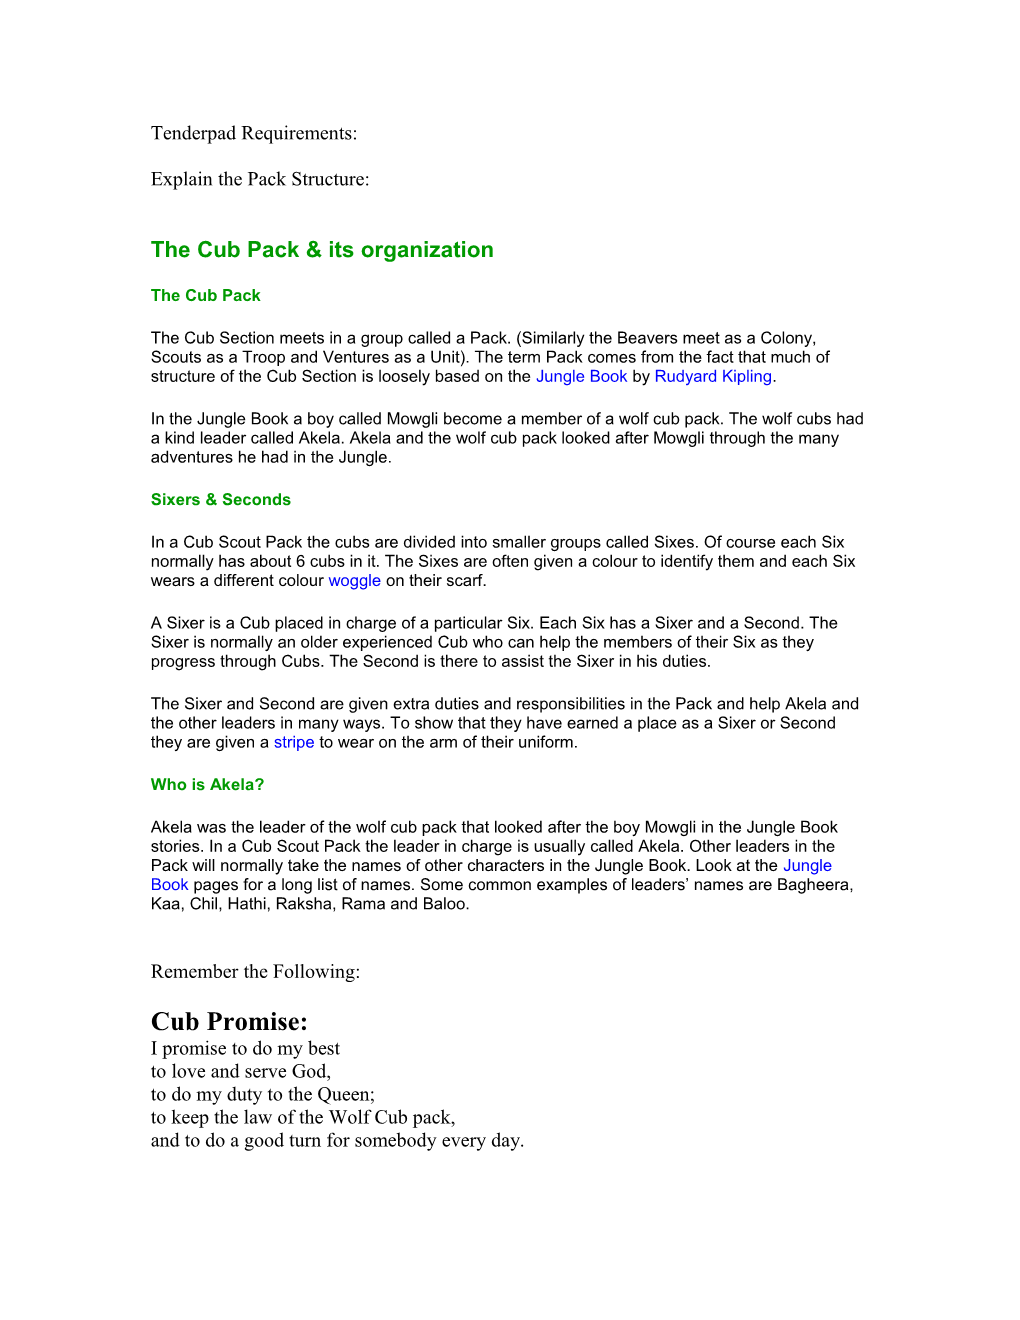 The Cub Pack & Its Organization